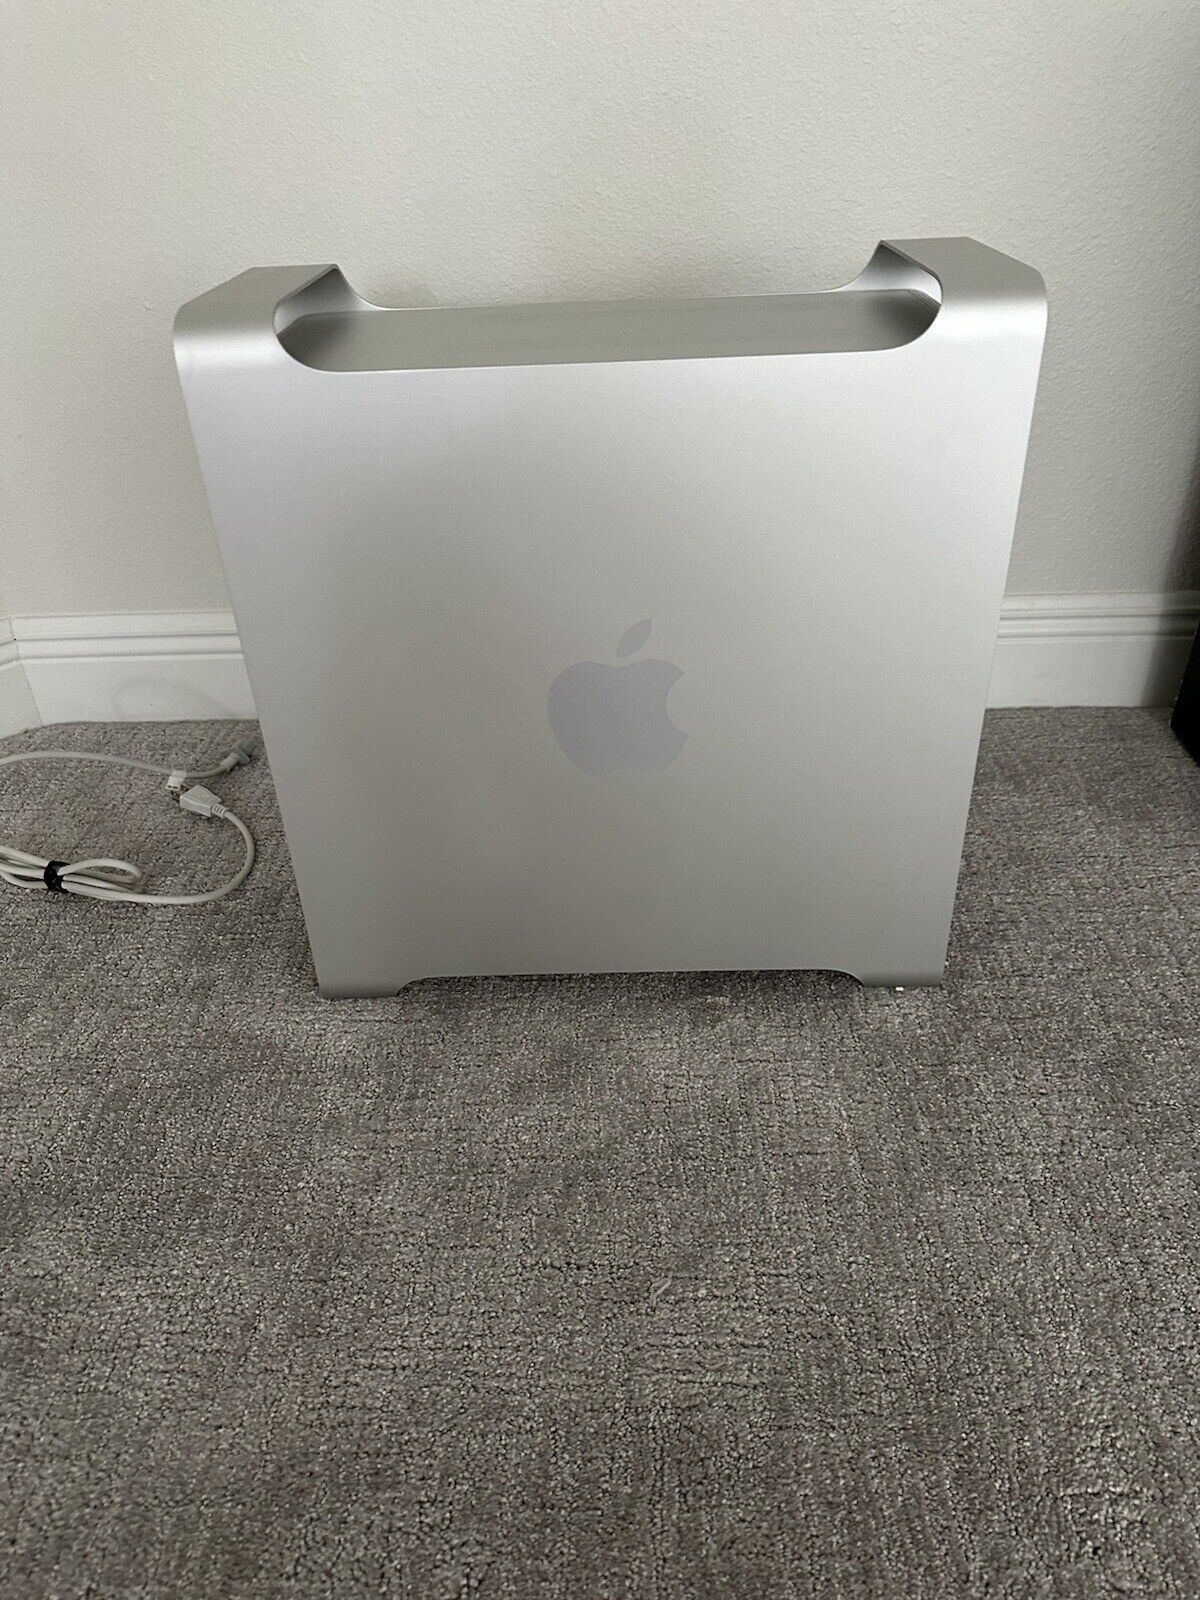 2008 Apple Mac Pro 8 Core 3.2 - MB451LL/A in Original Box